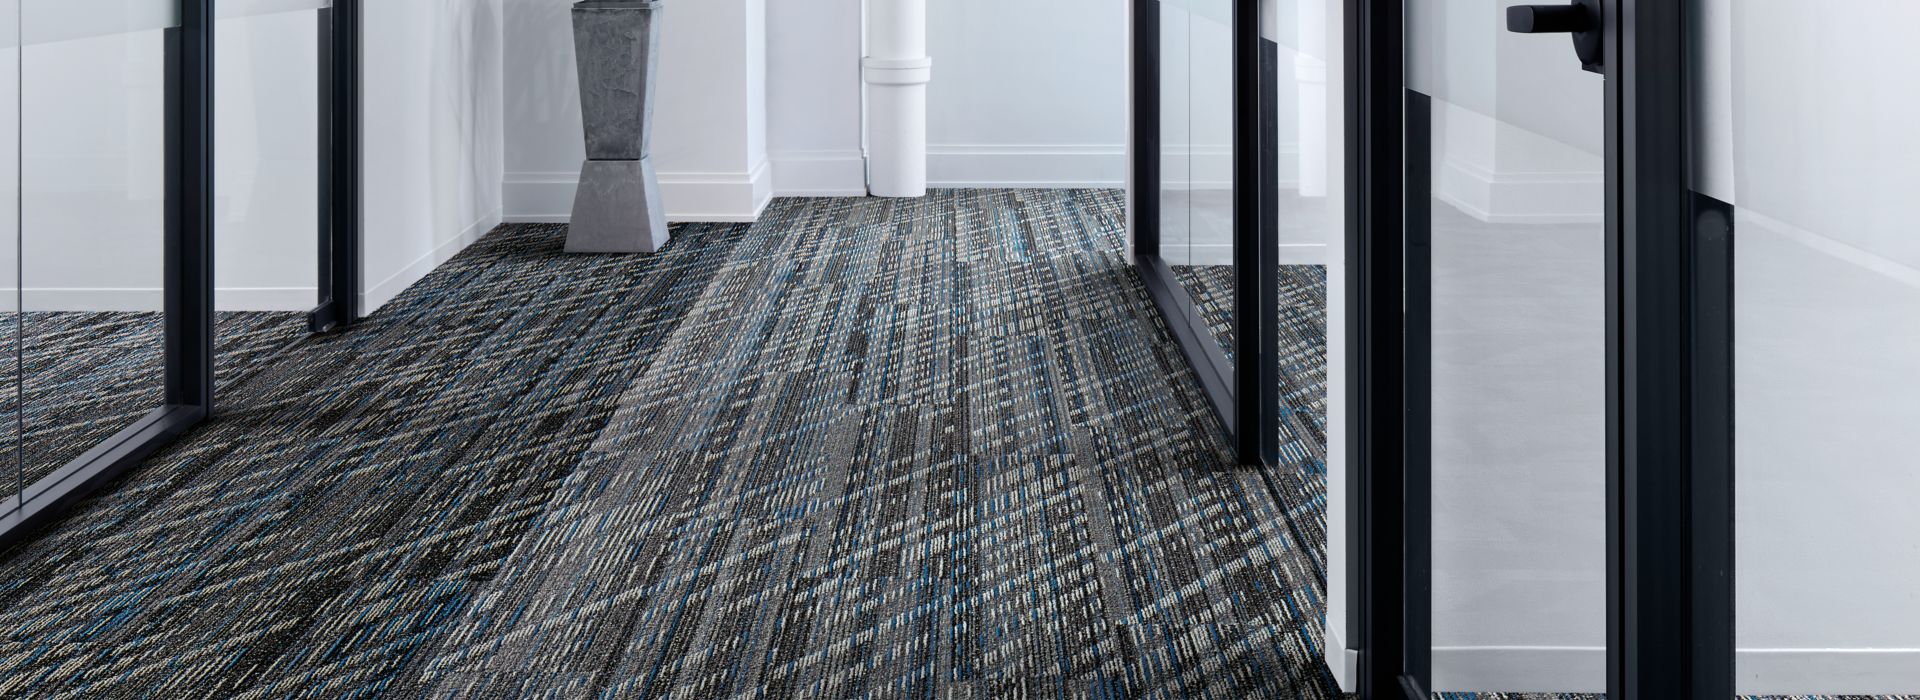 Interface Soft Glow plank carpet tile in office hallway imagen número 2